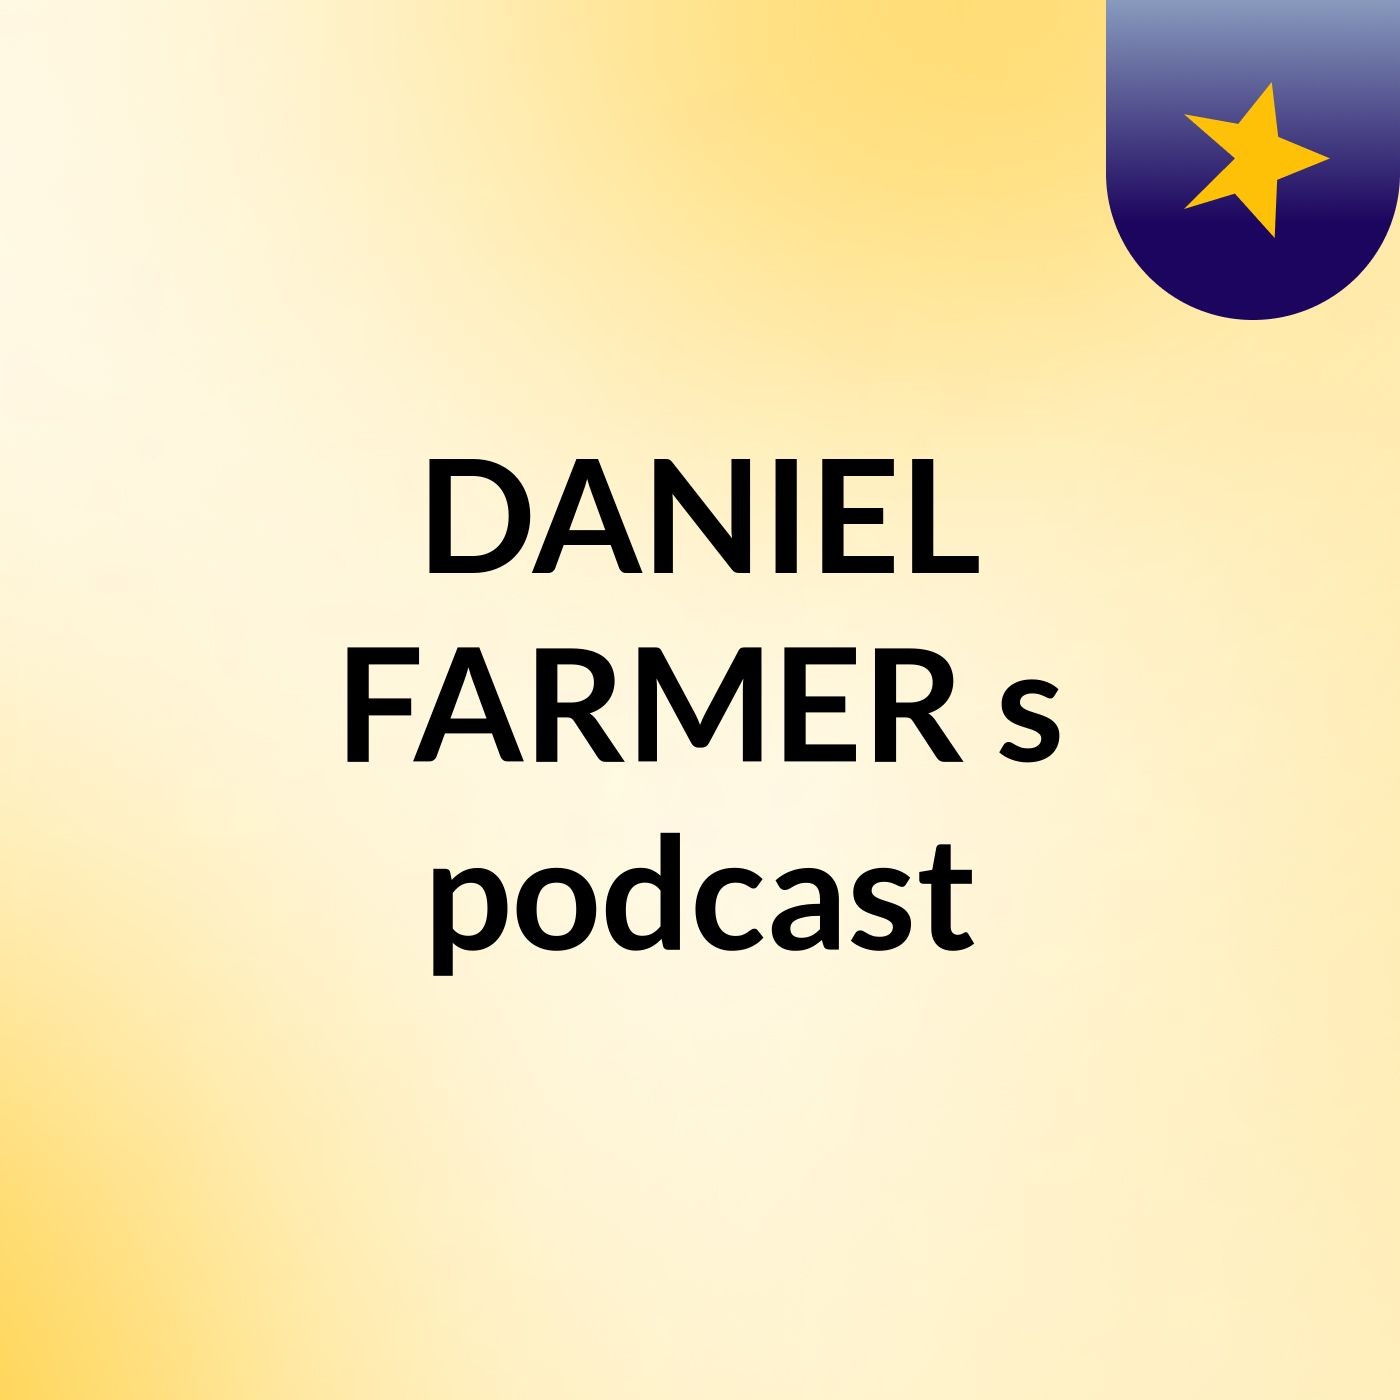 DANIEL FARMER's podcast